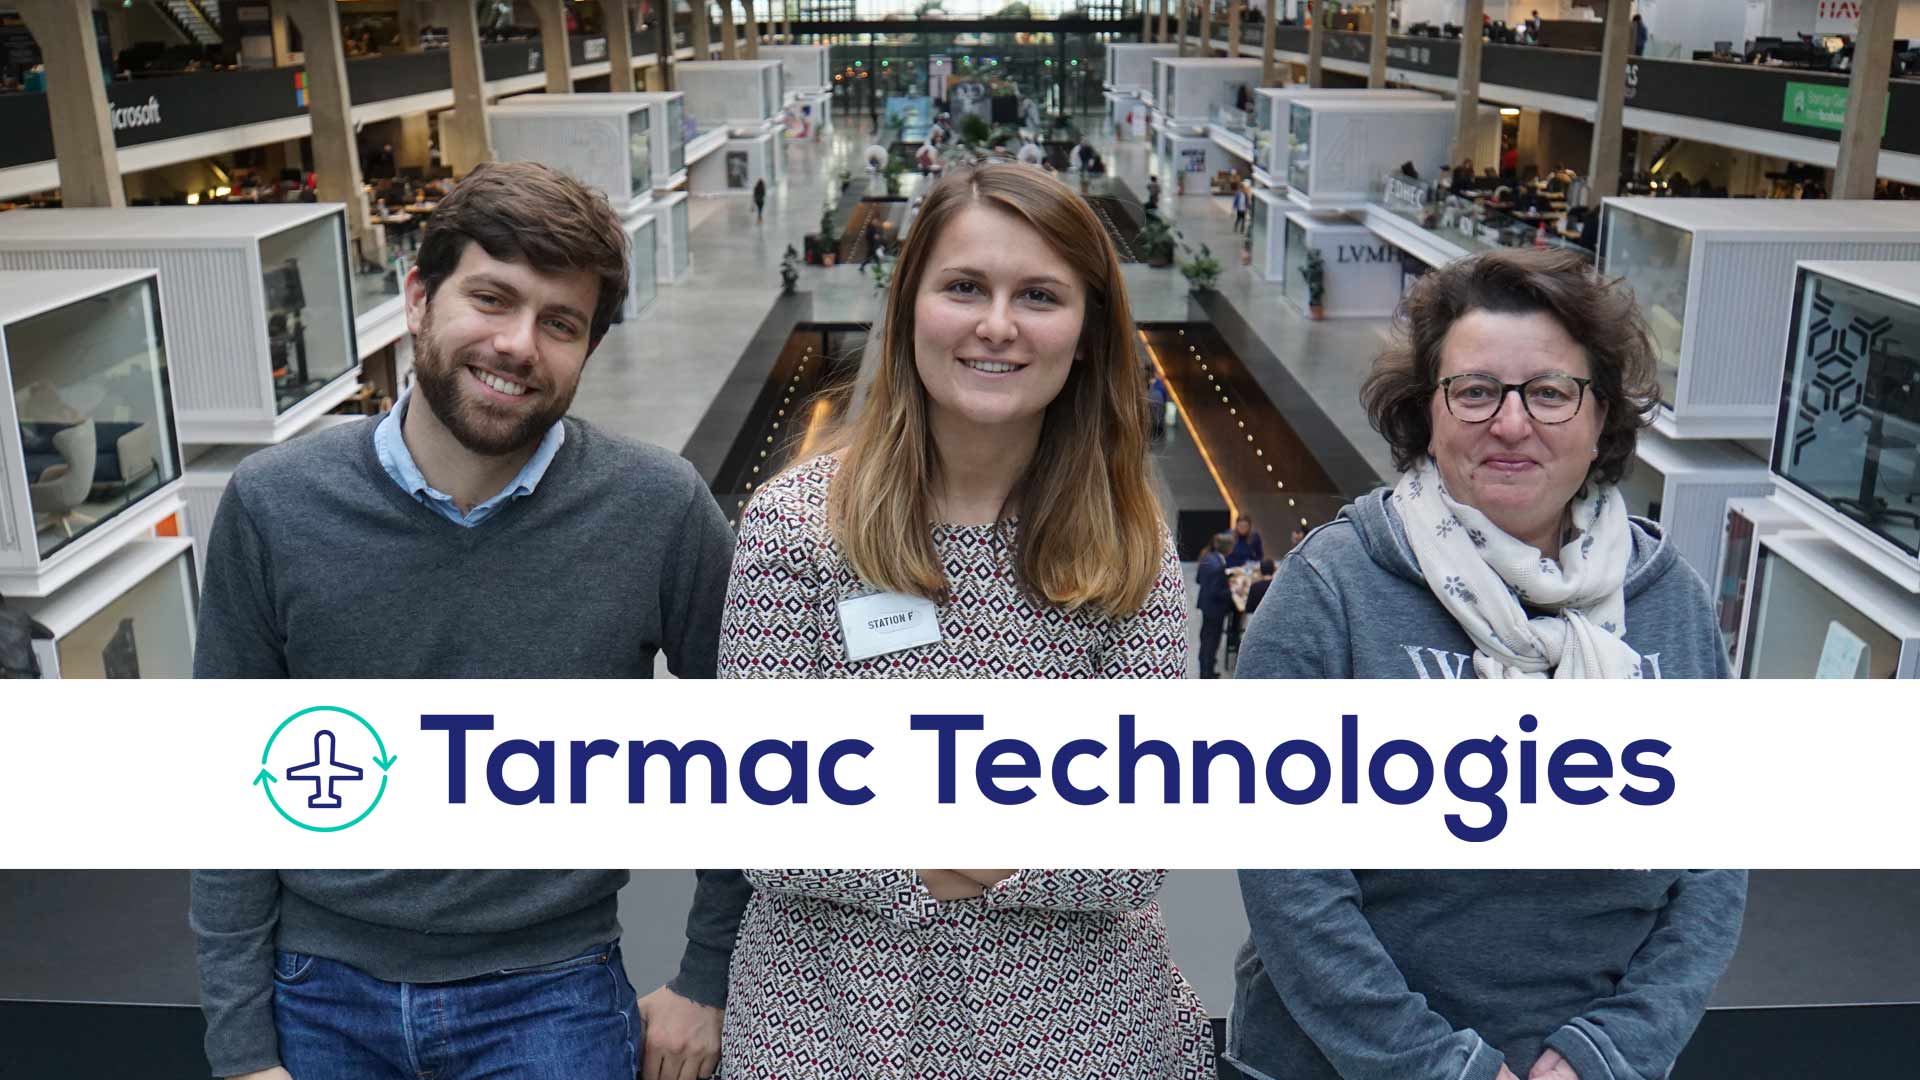 Tarmac Technologies